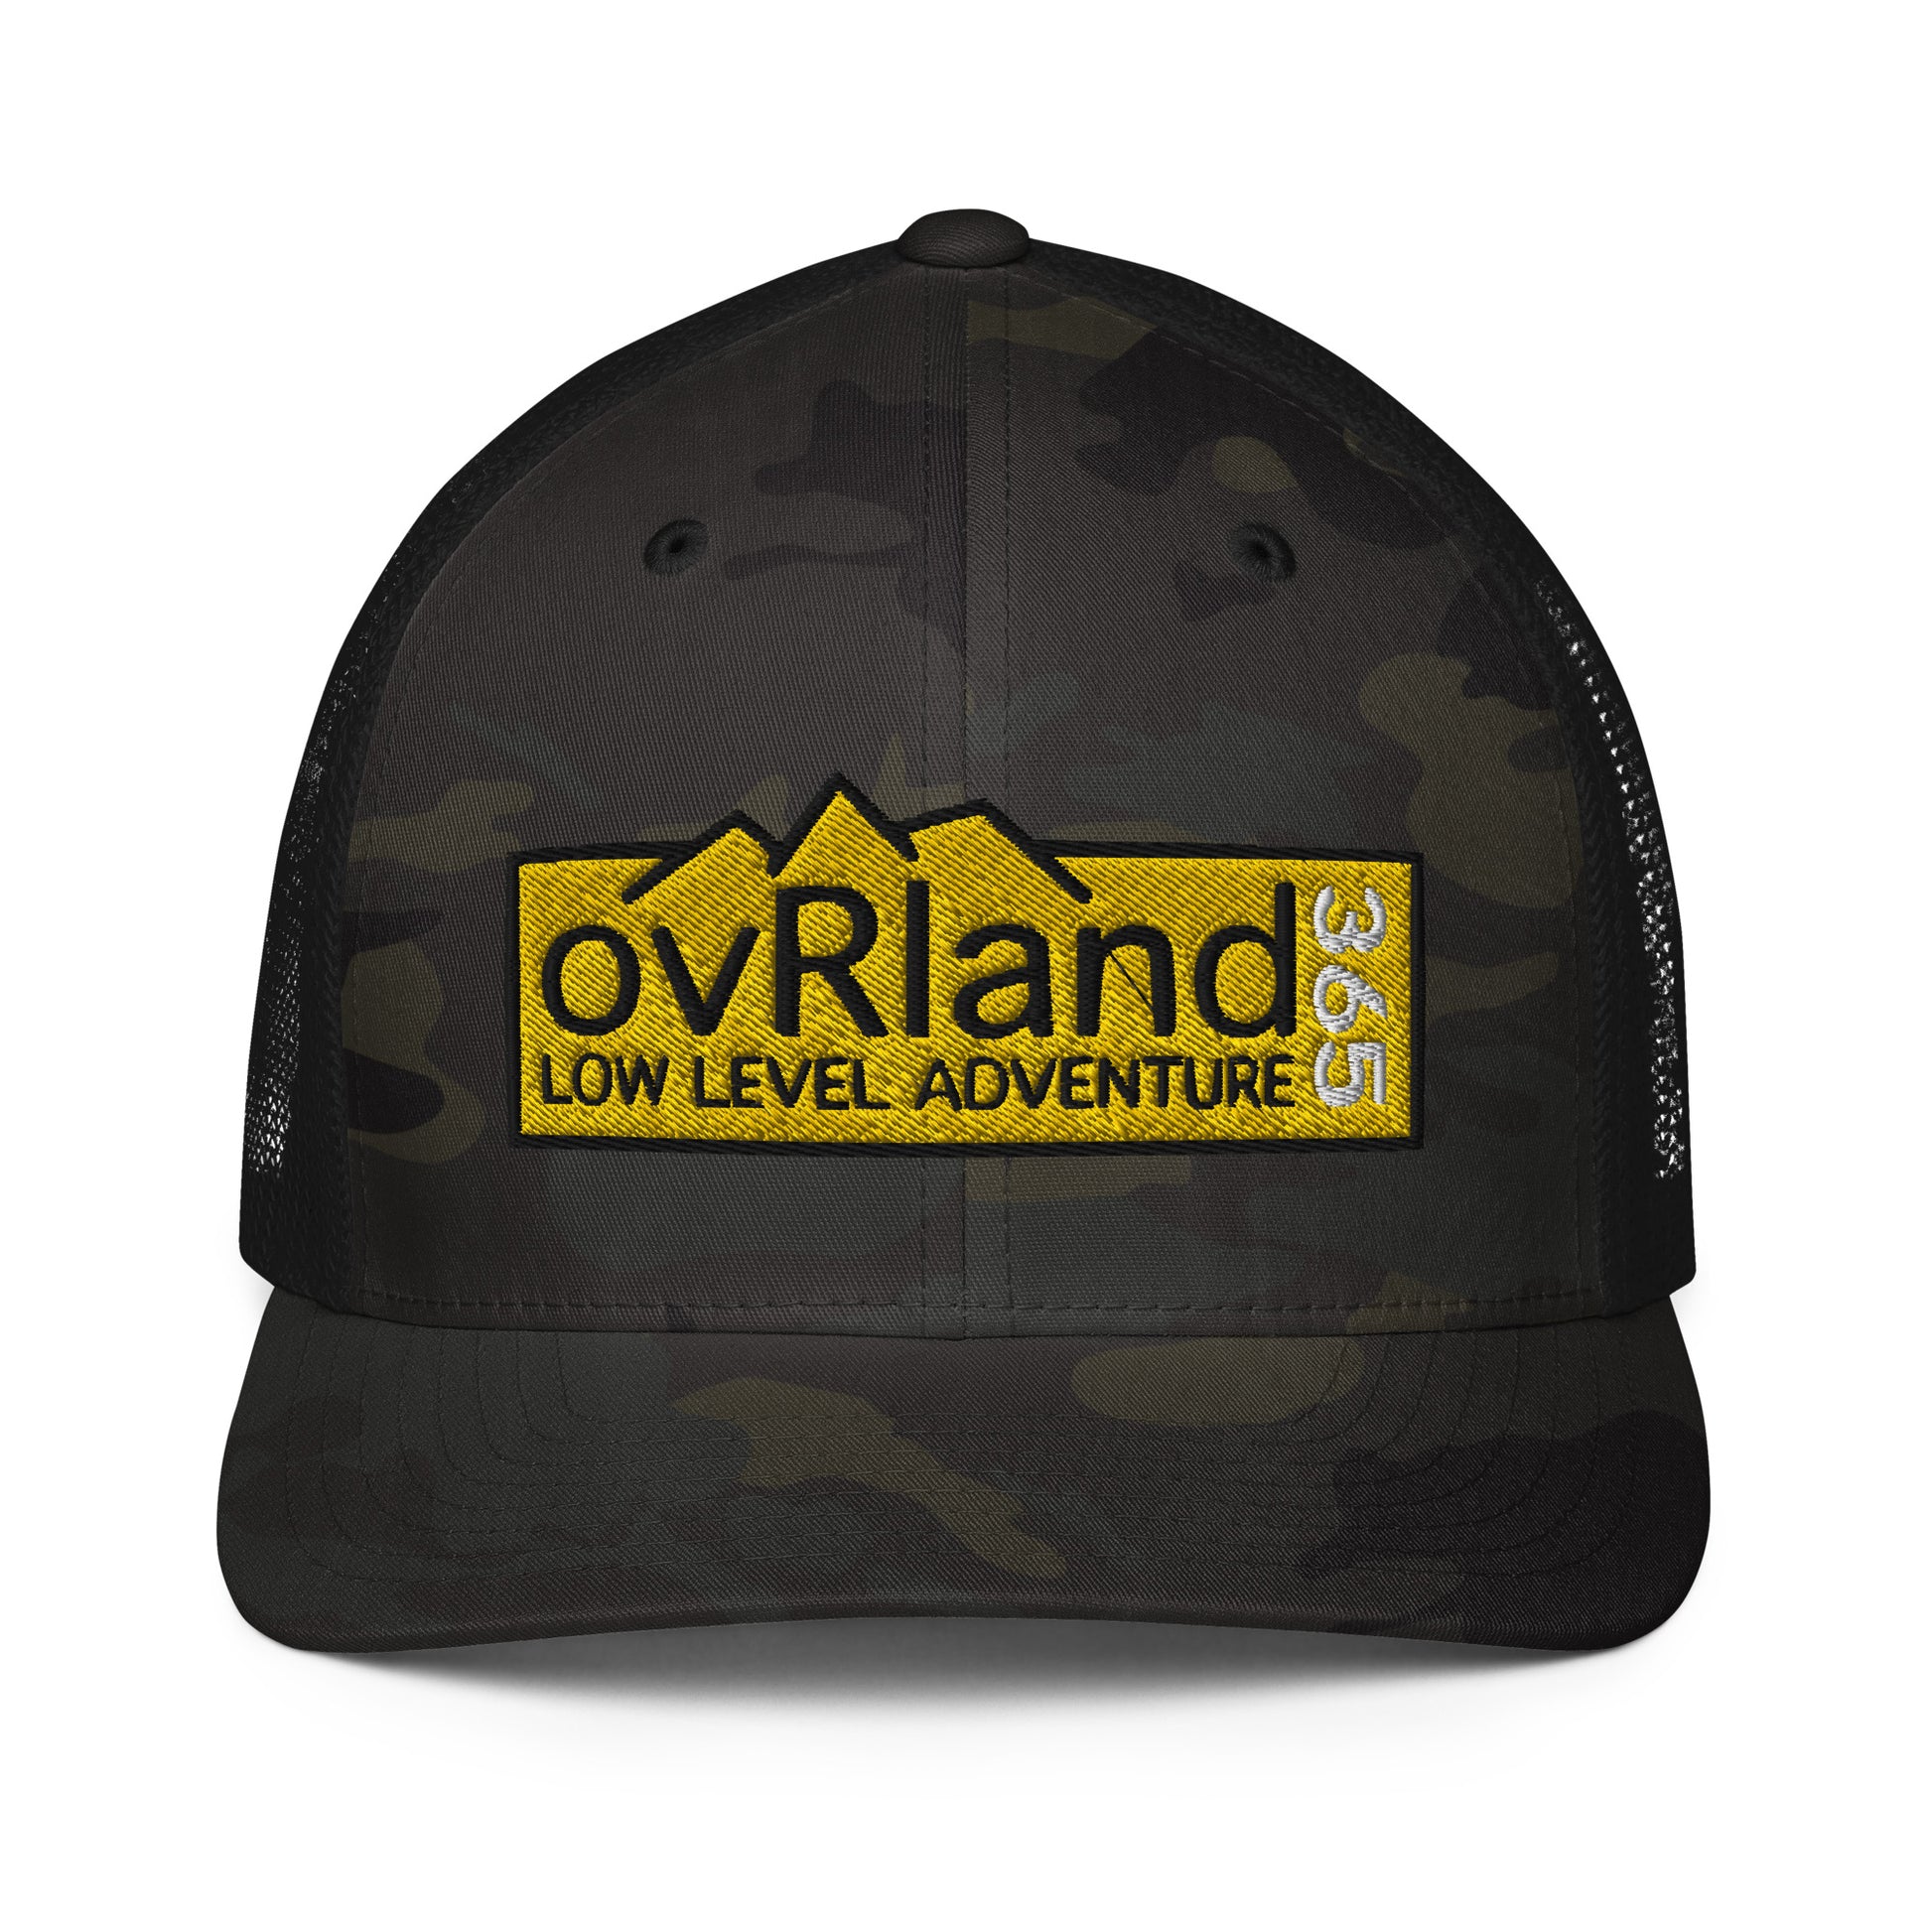 Black MultiCam FlexFit Trucker Cap with our Low Level Adventure yellow logo. front facing. overland365.com